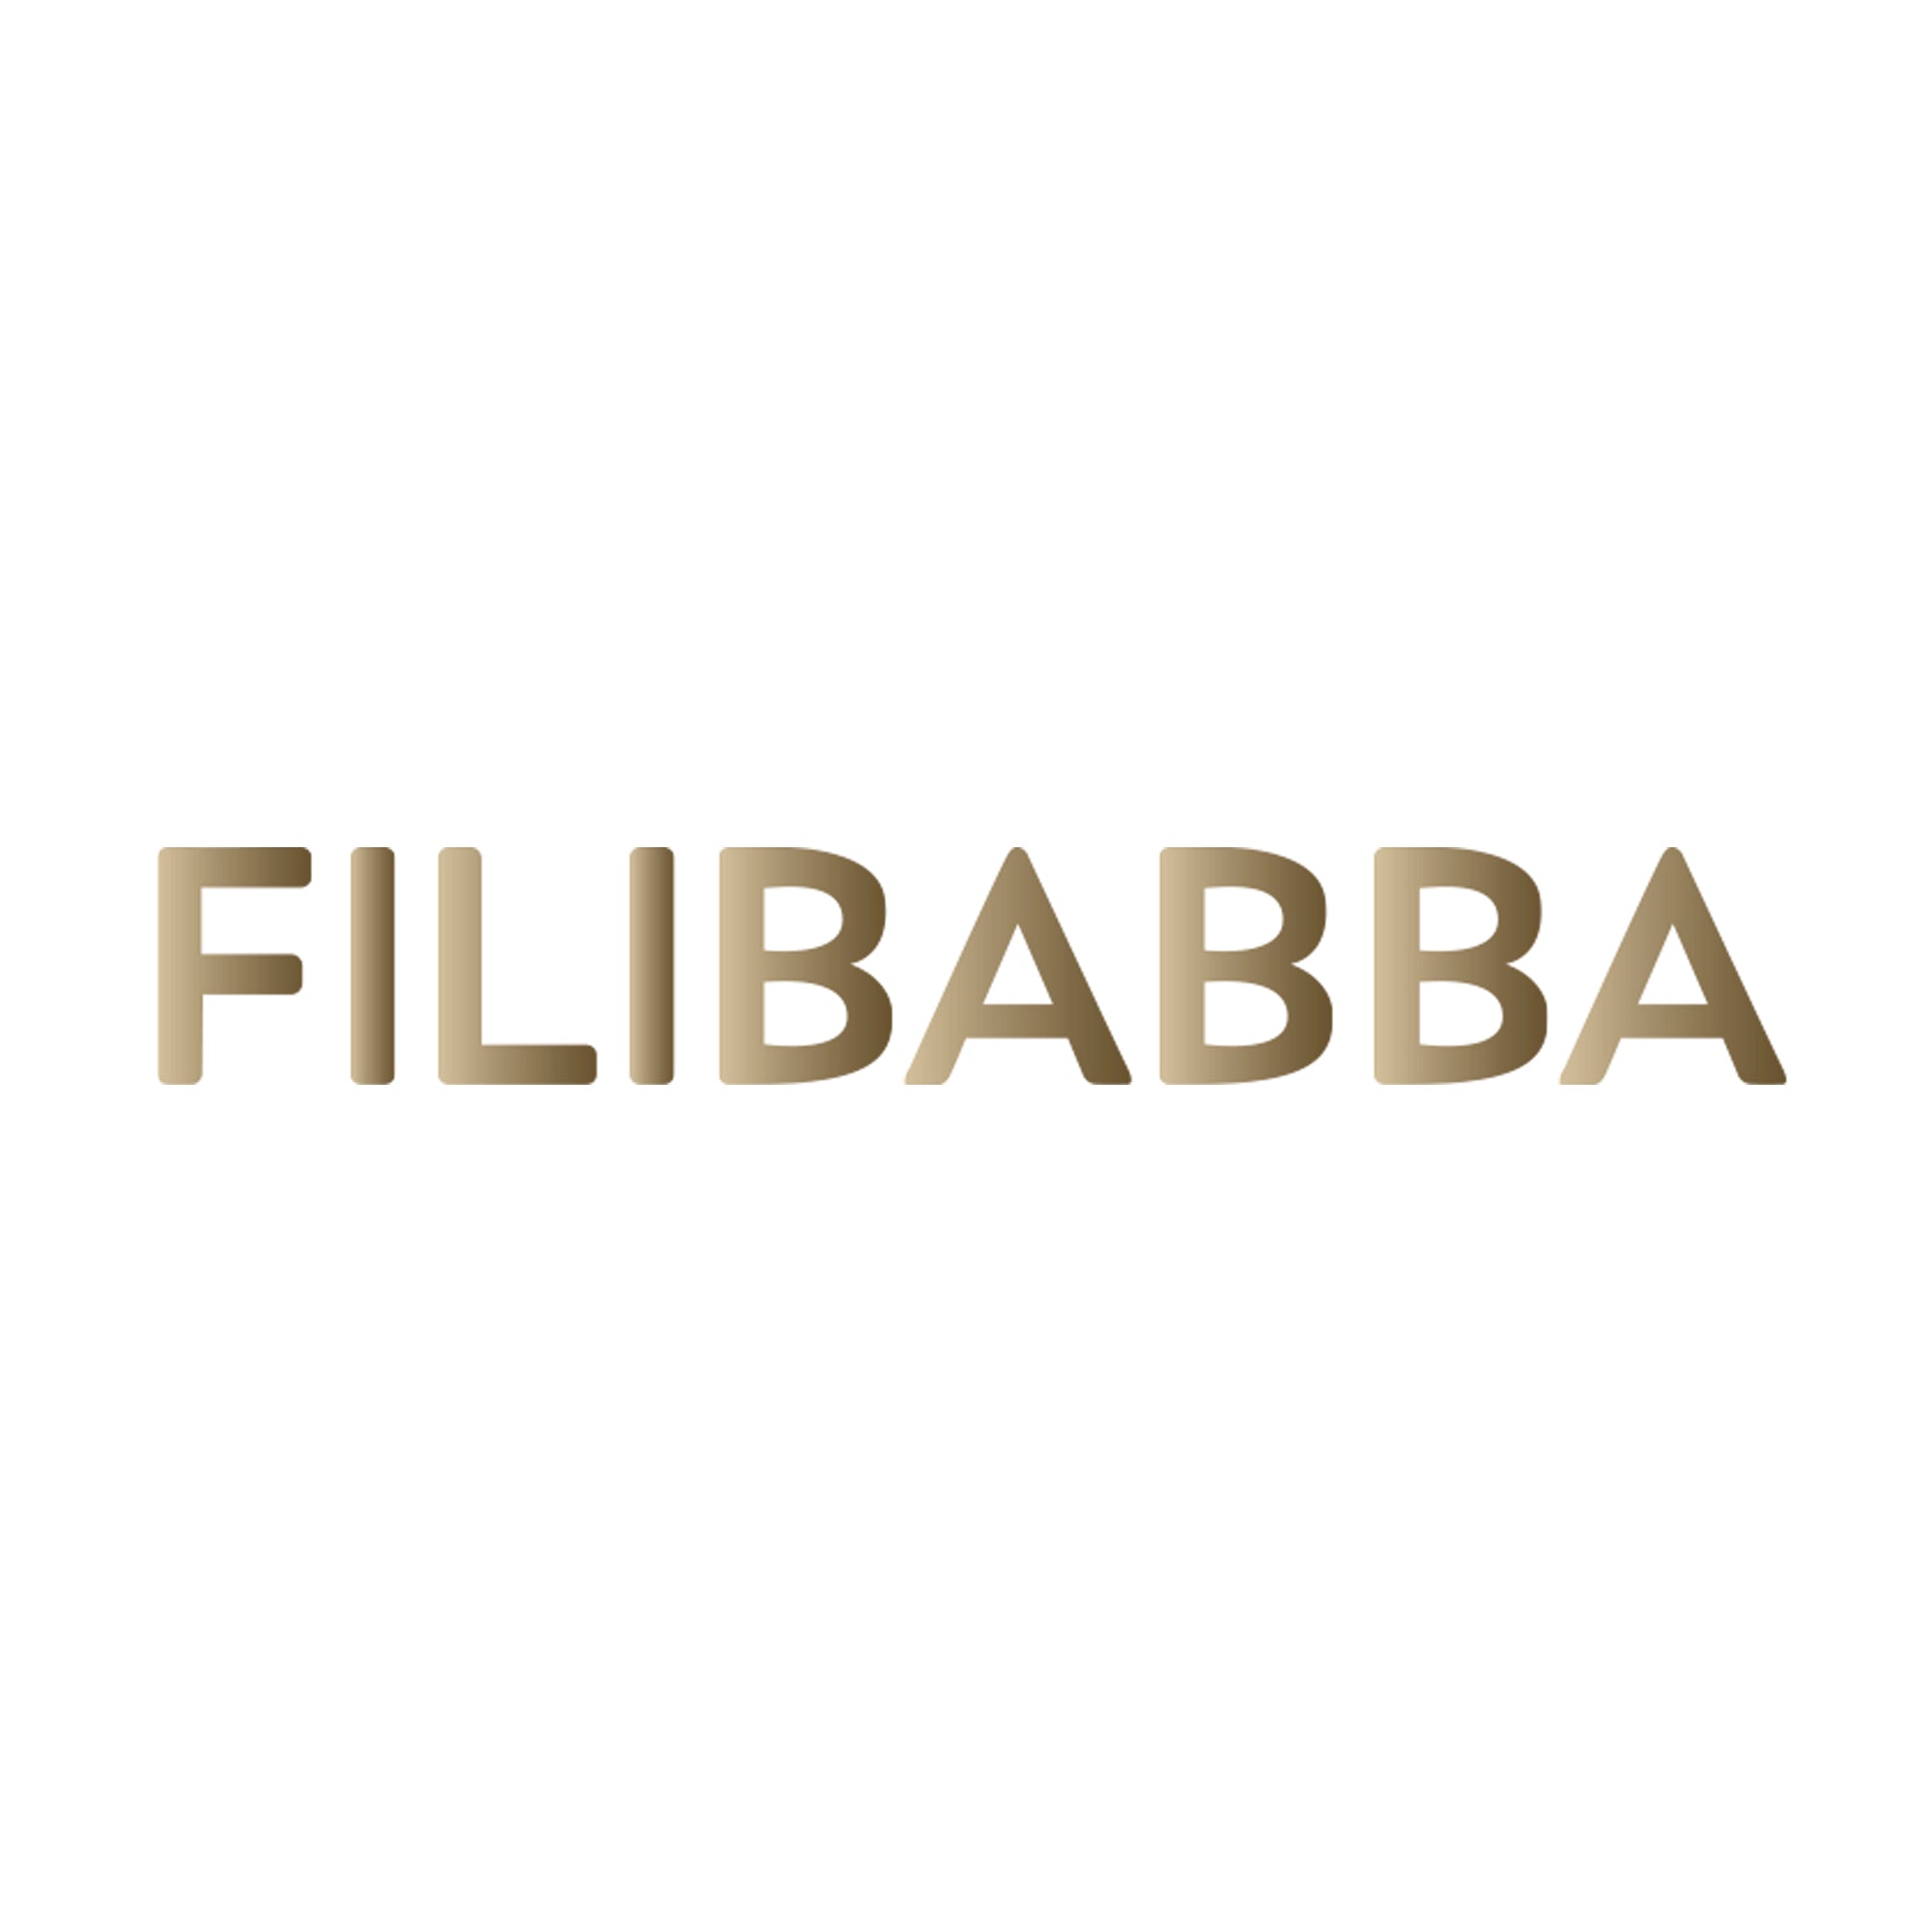 FILIBABBA-GOLD-LOGO_squared.jpg__PID:bad3775a-57f4-4651-a423-39821422d6b6